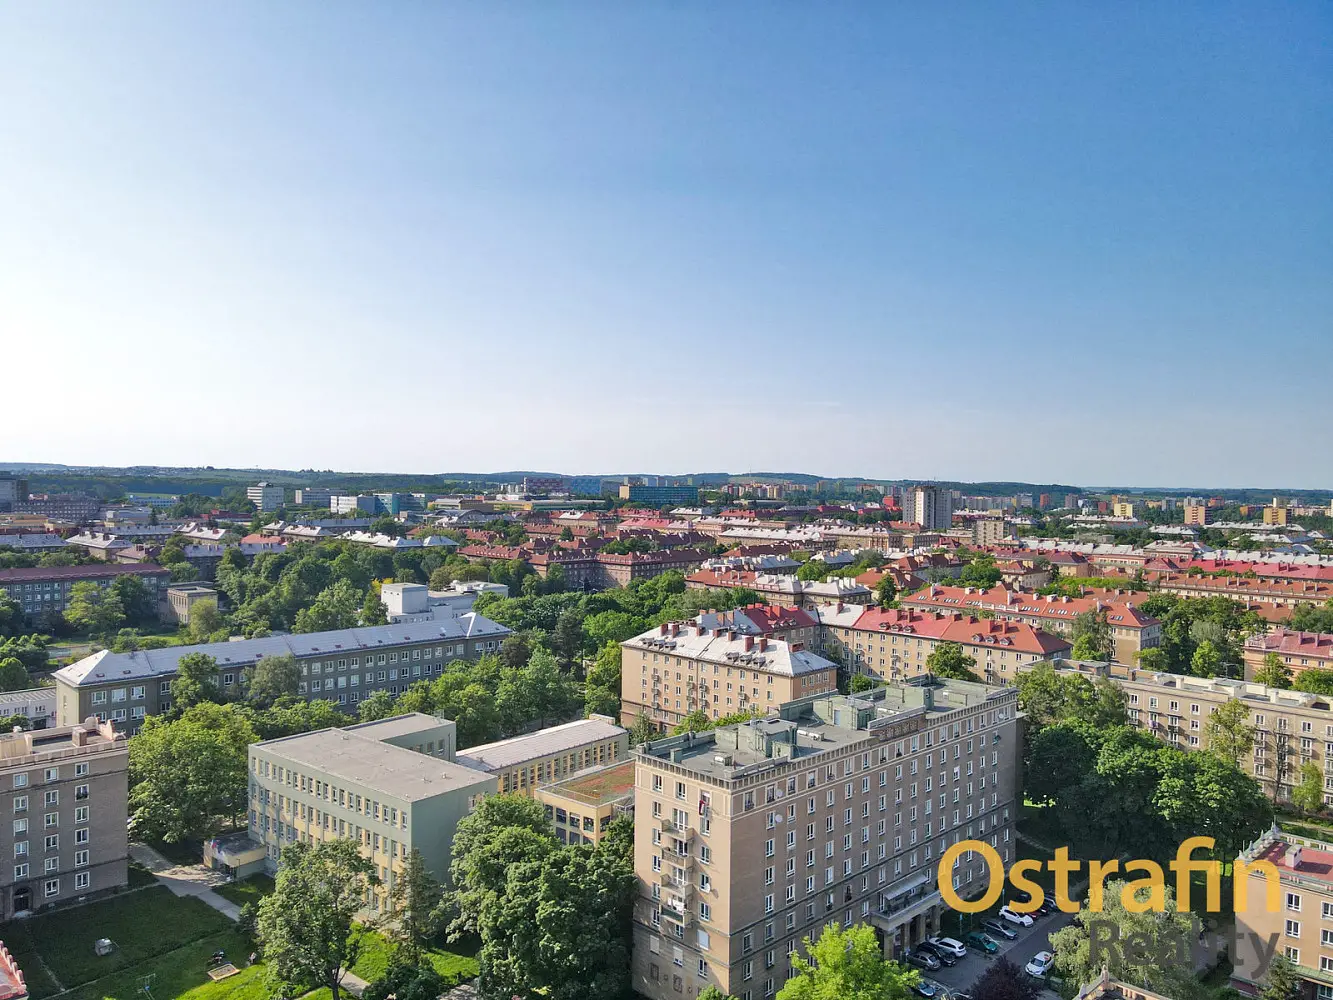 Čs. exilu, Ostrava - Poruba